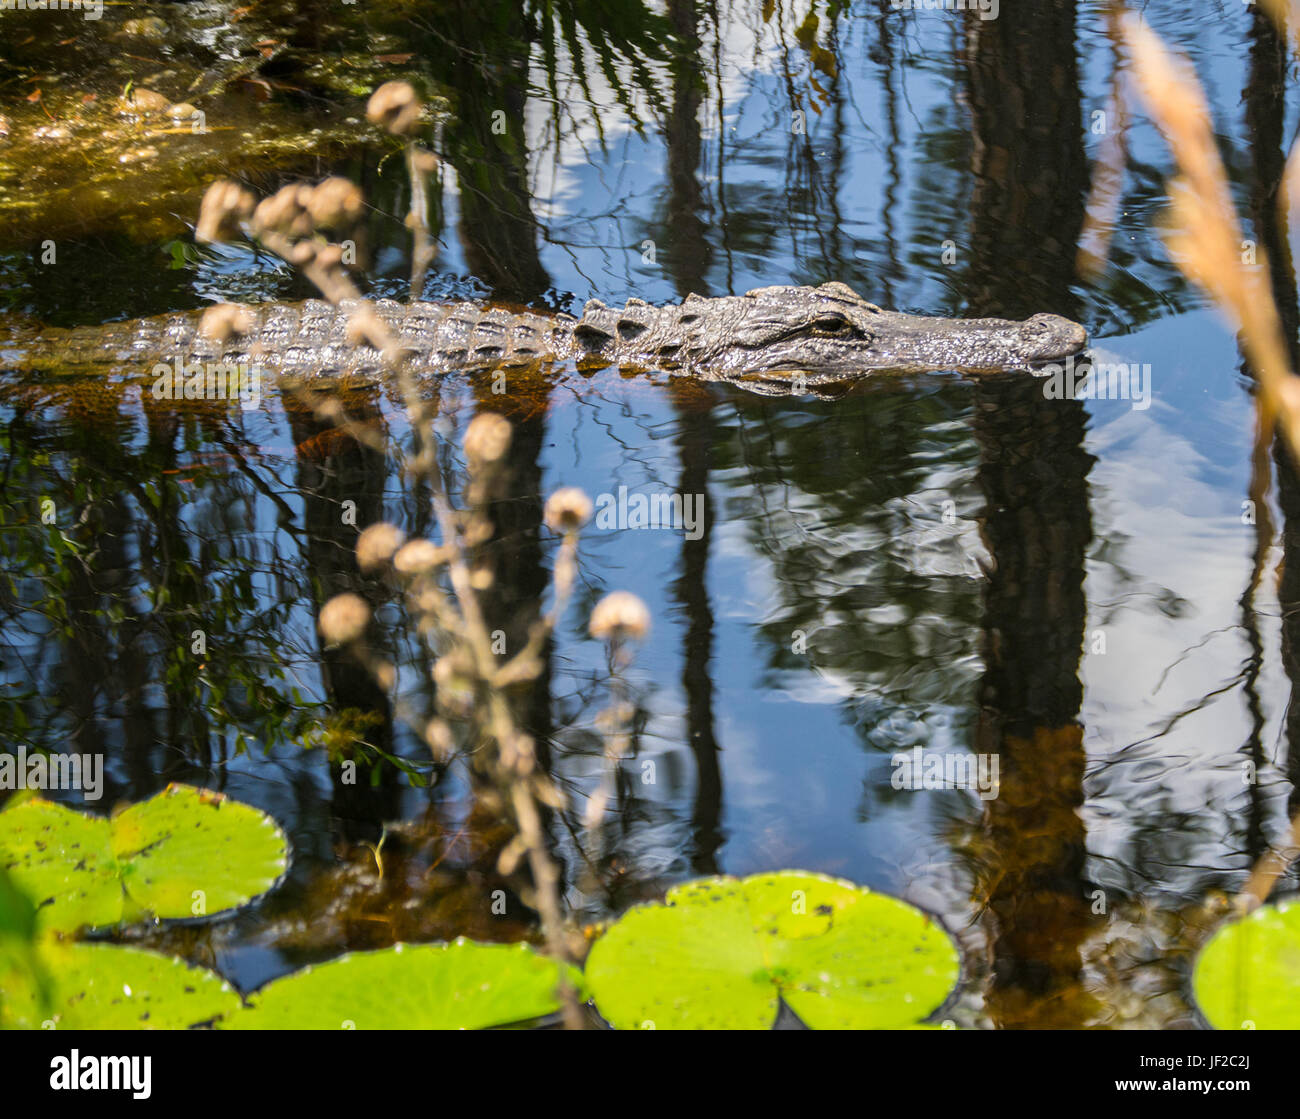 American Alligator in the water in the Okefenokee Wildlife Refuge. Stock Photo